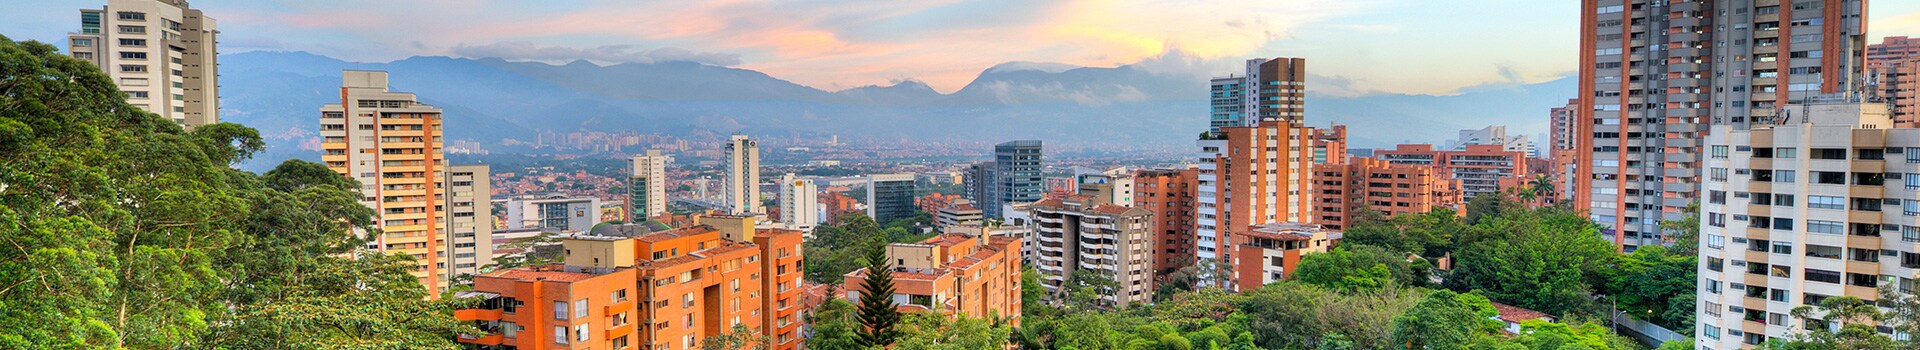 Santo Domingo - Medellín - jose marie cordova